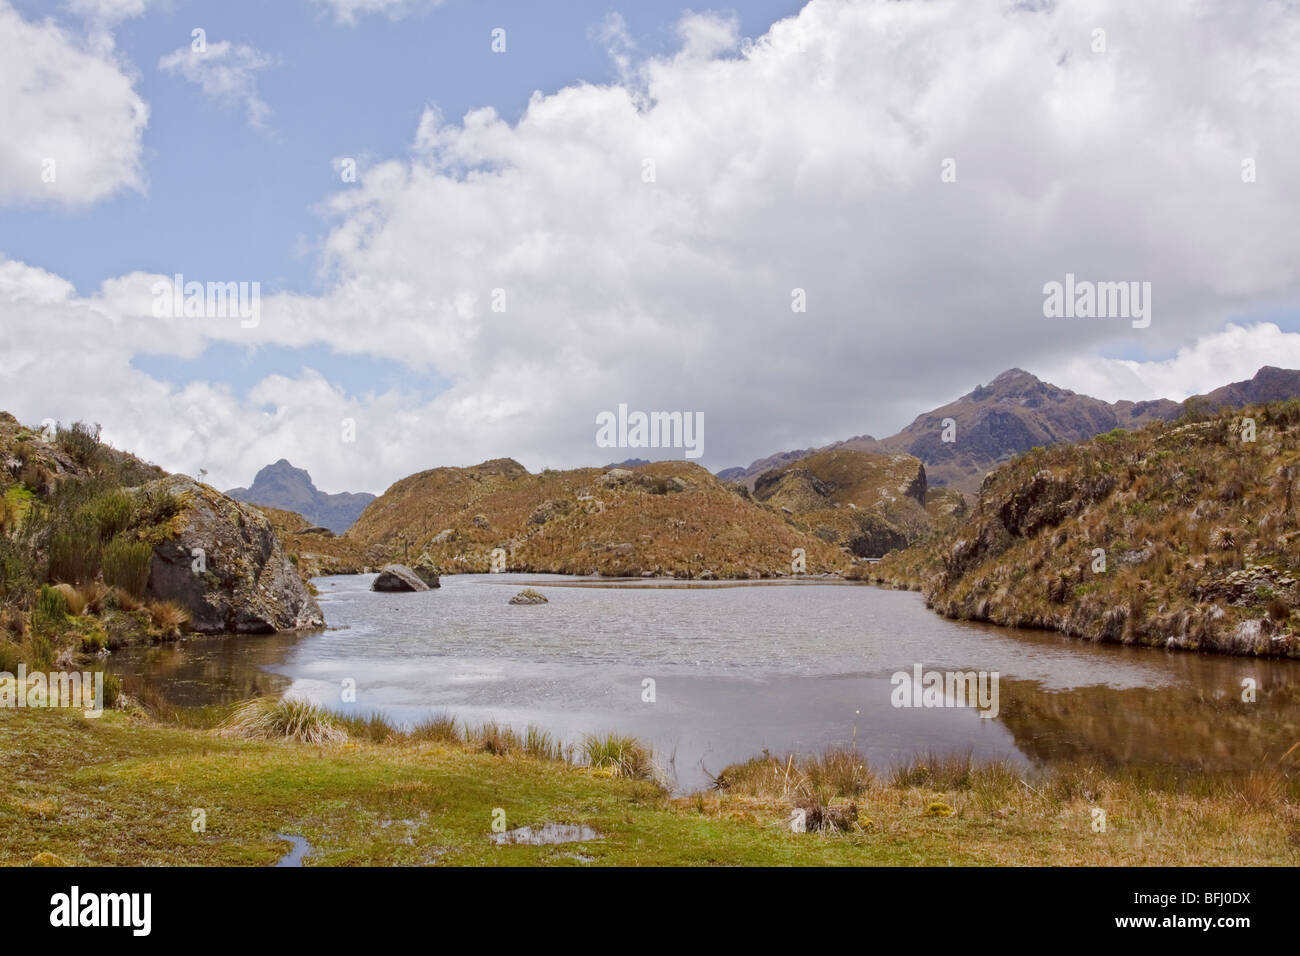 A scenic view of Cajas National Park near Cuenca, Ecuador. Stock Photo